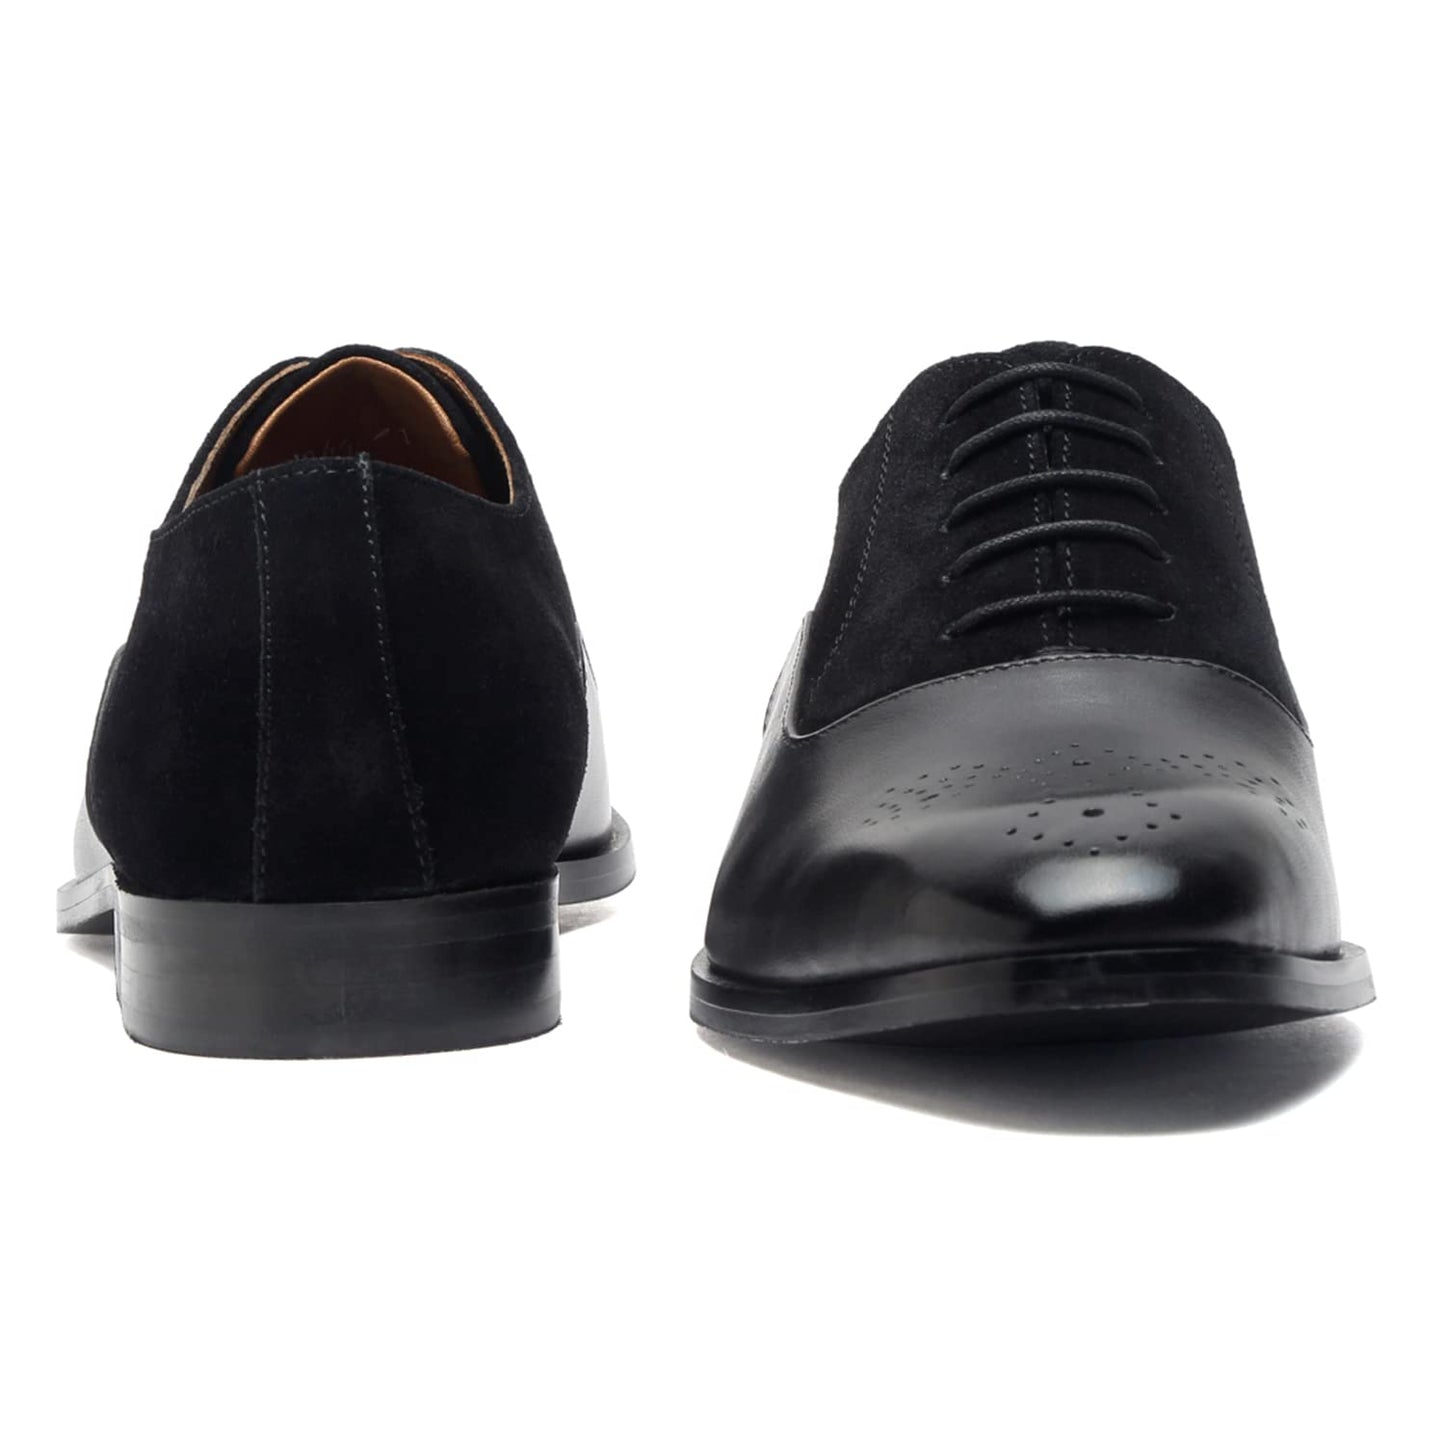 Buy LOUIS STITCH Men's Devils Black Derby Formal Shoes Handmade